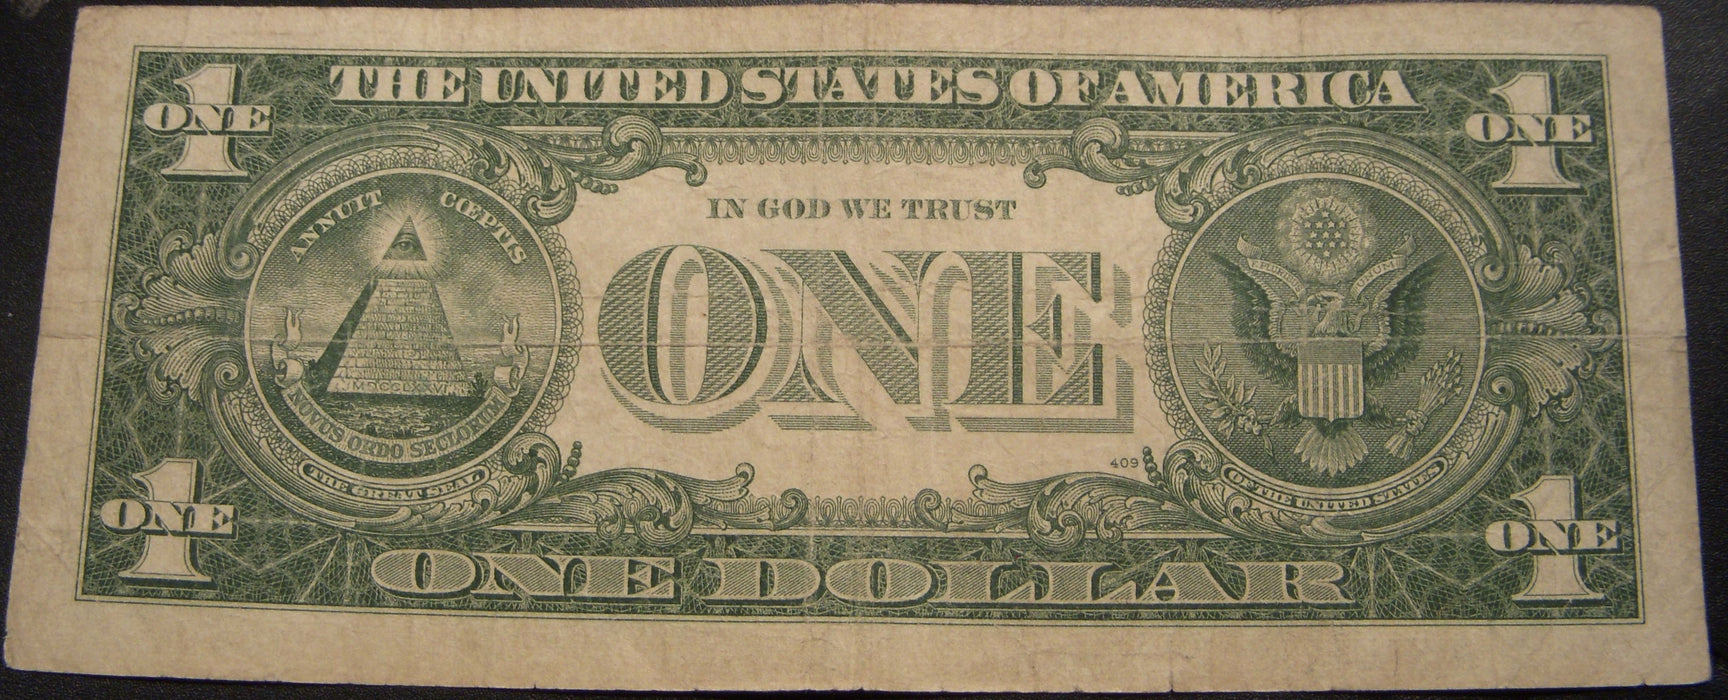 1957A $1 Silver Certificate - Star Note FR# 1620*